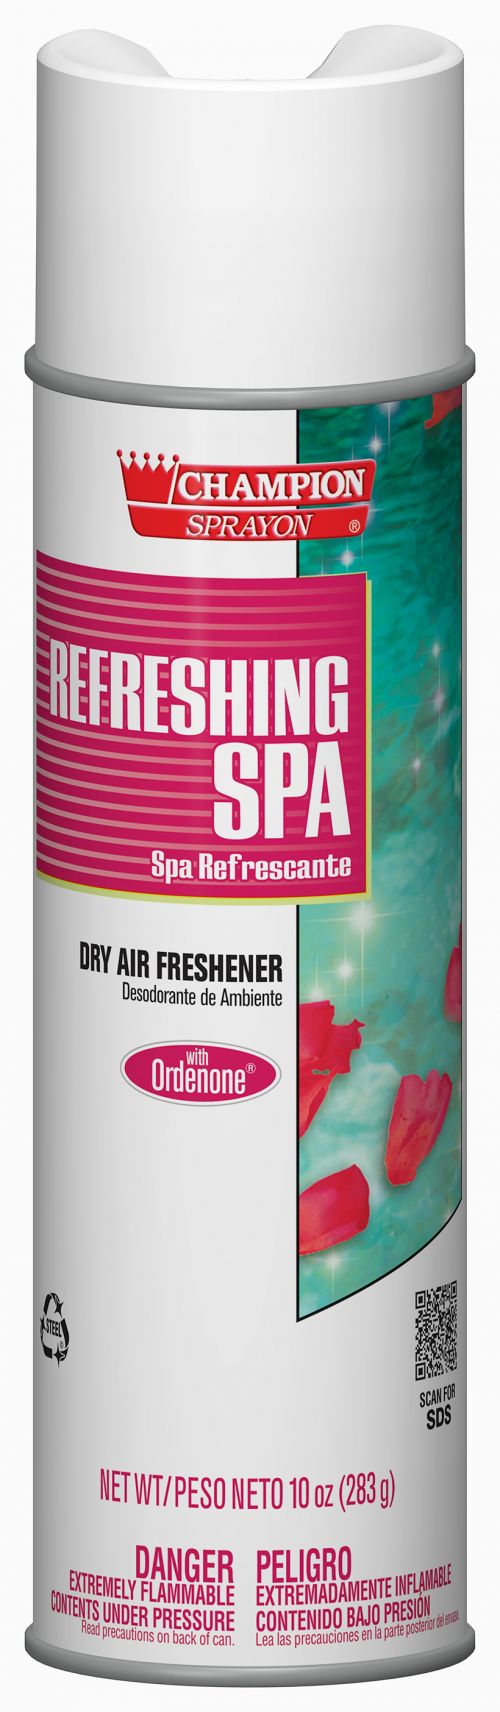 Chase Dry Air Fresheners Refreshing Spa Pack 12/10 oz